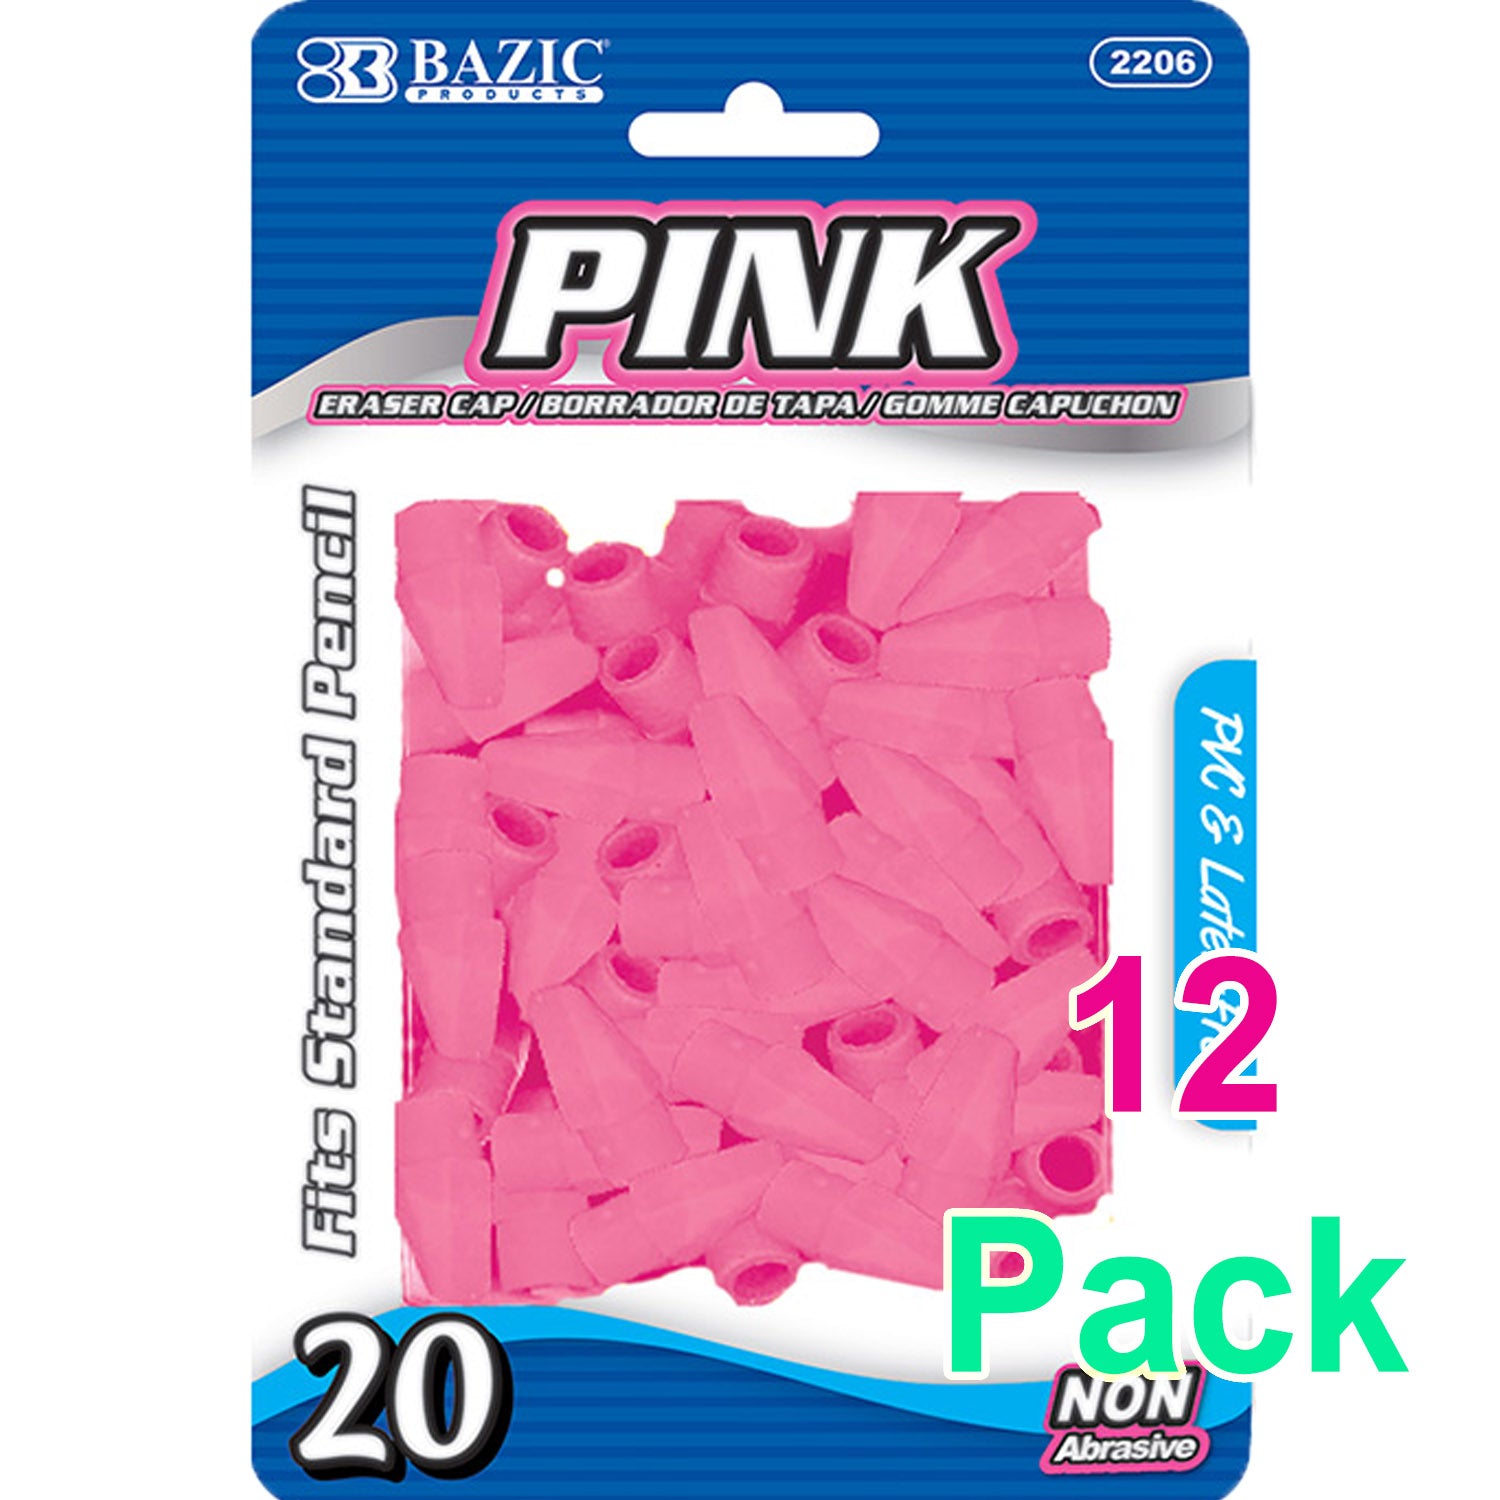 Pink Eraser Top, Pencil Top Erasers, Arrowhead Caps Tops Eraser